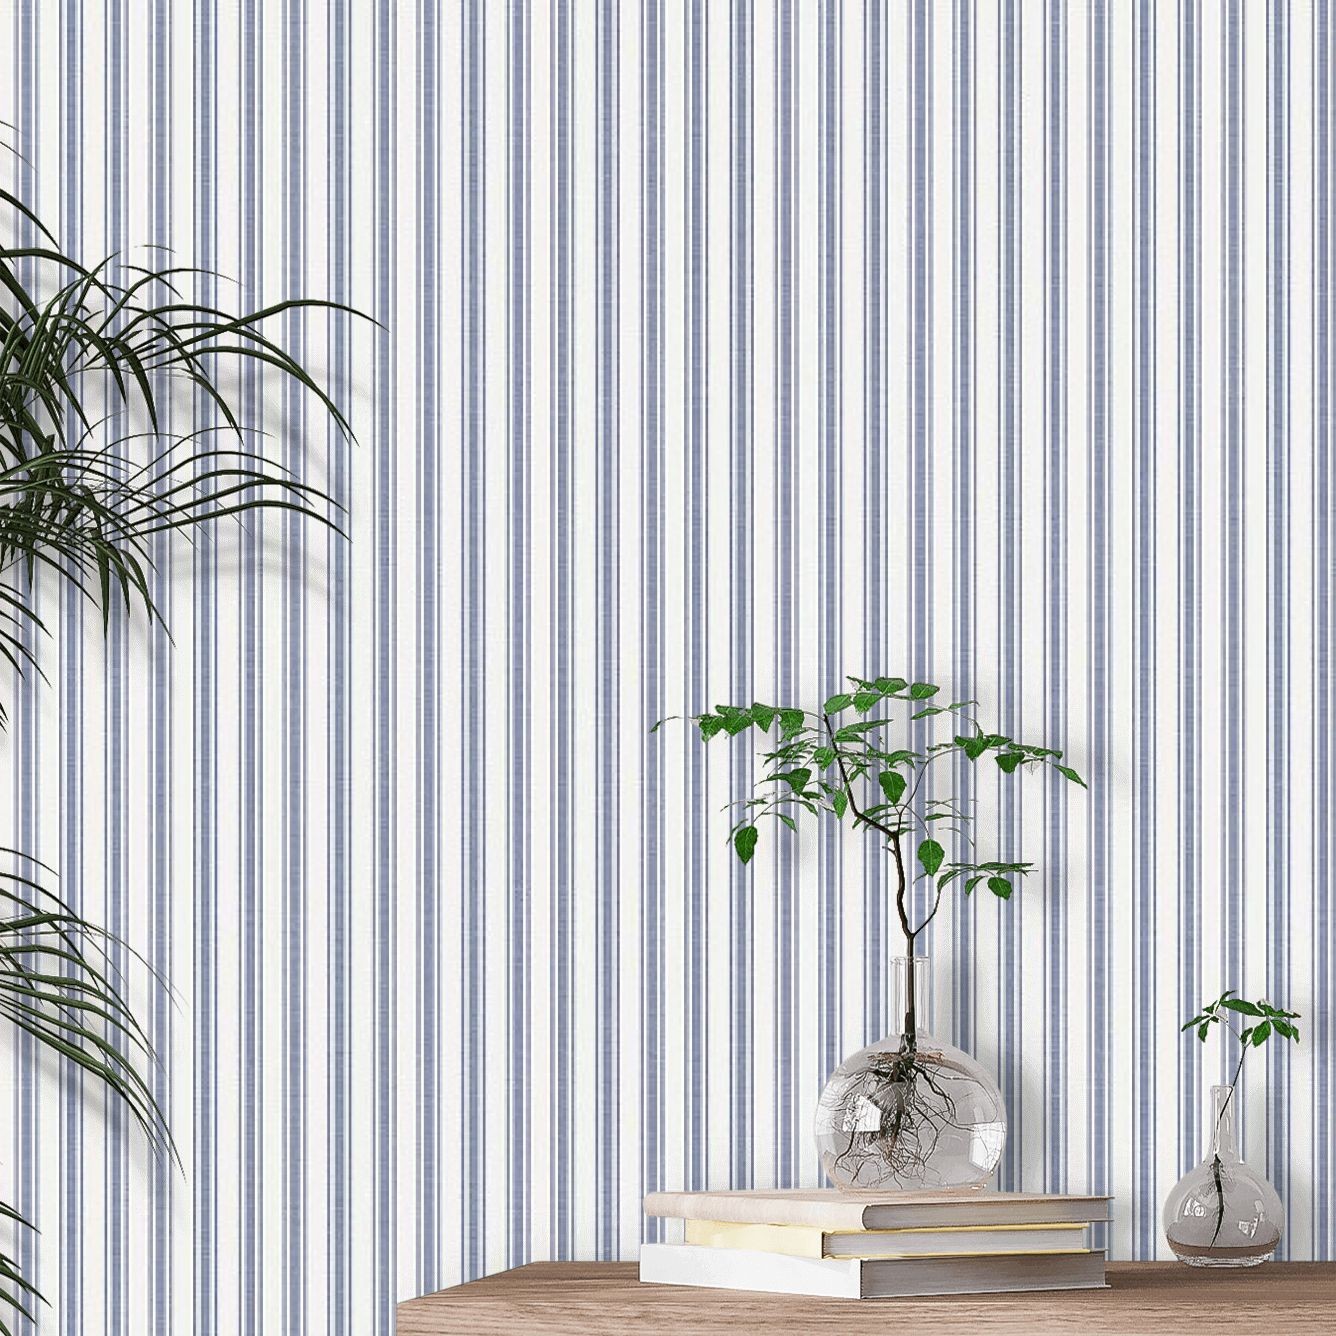 Aspo Stripe Wallpaper - Dark Blue - By Boråstapeter - 8870